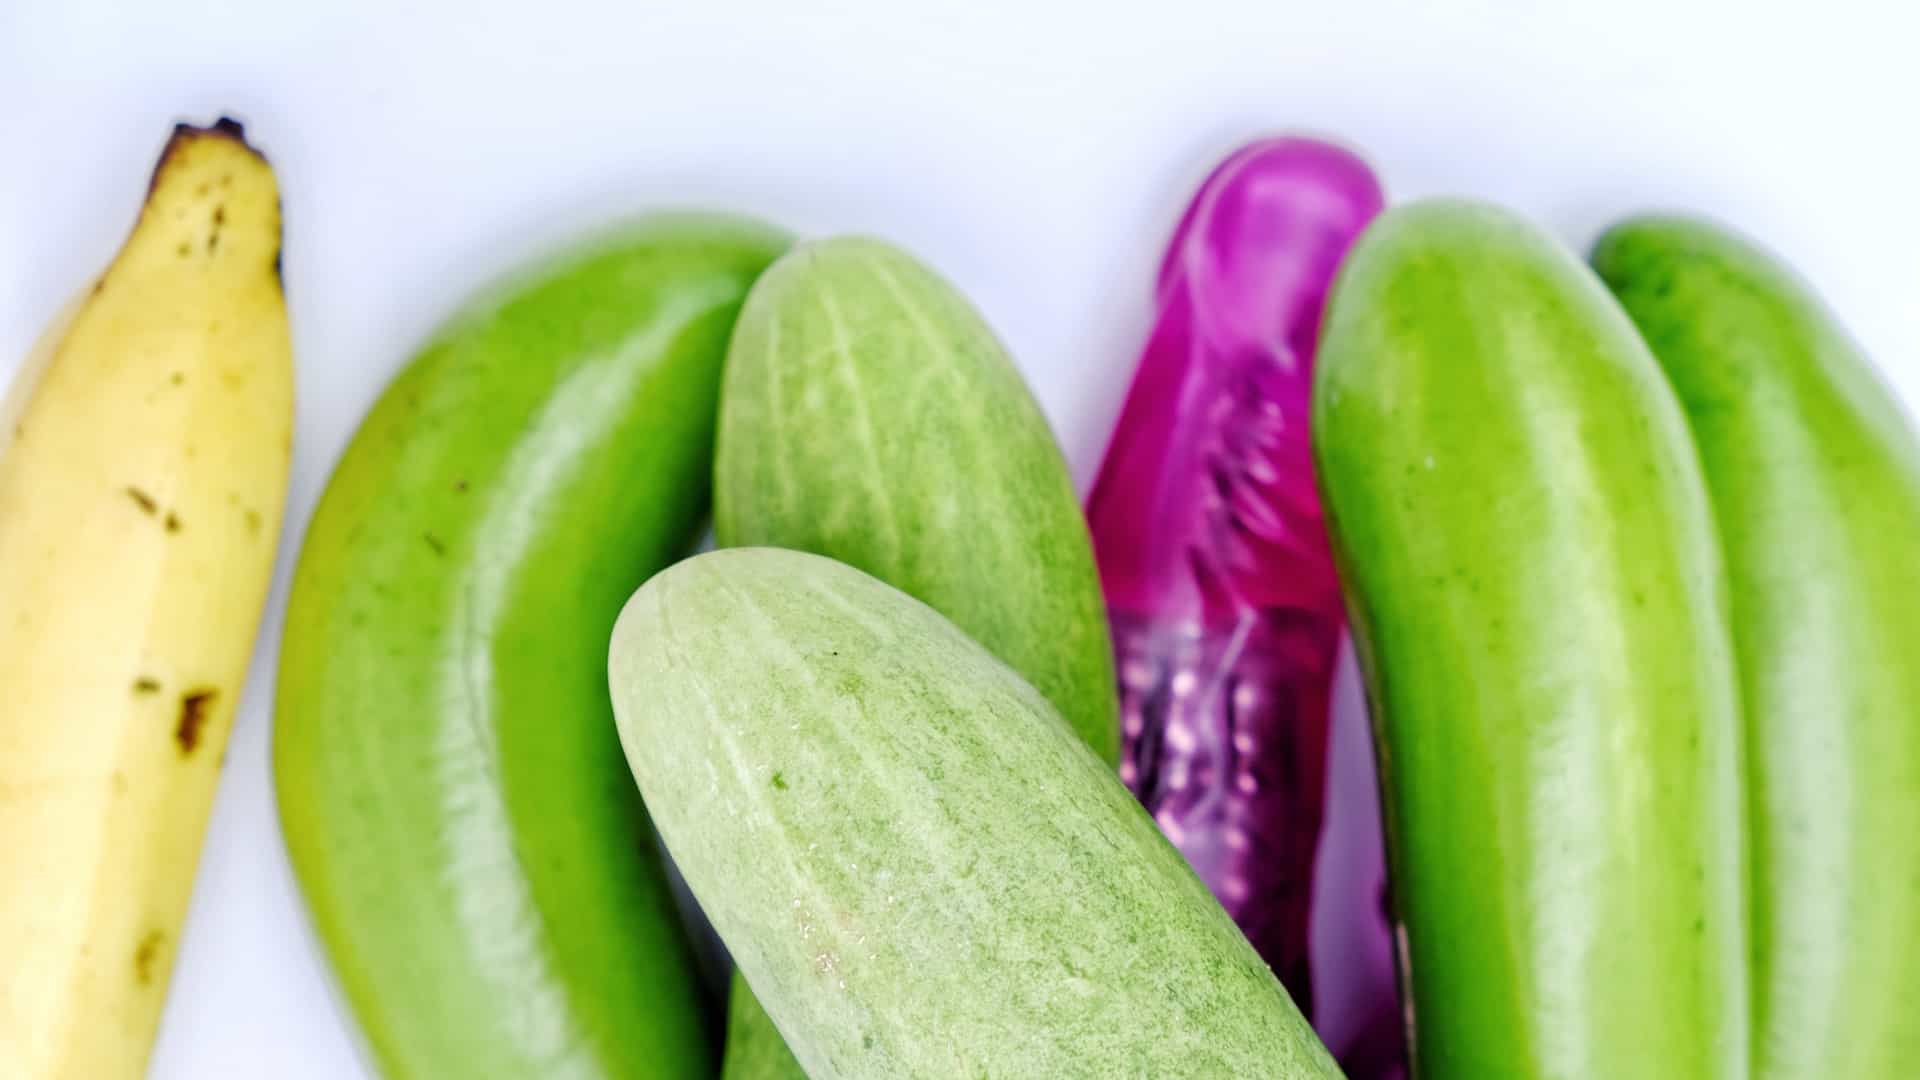 Cucumber,banana,eggplant and dildo sex toy.